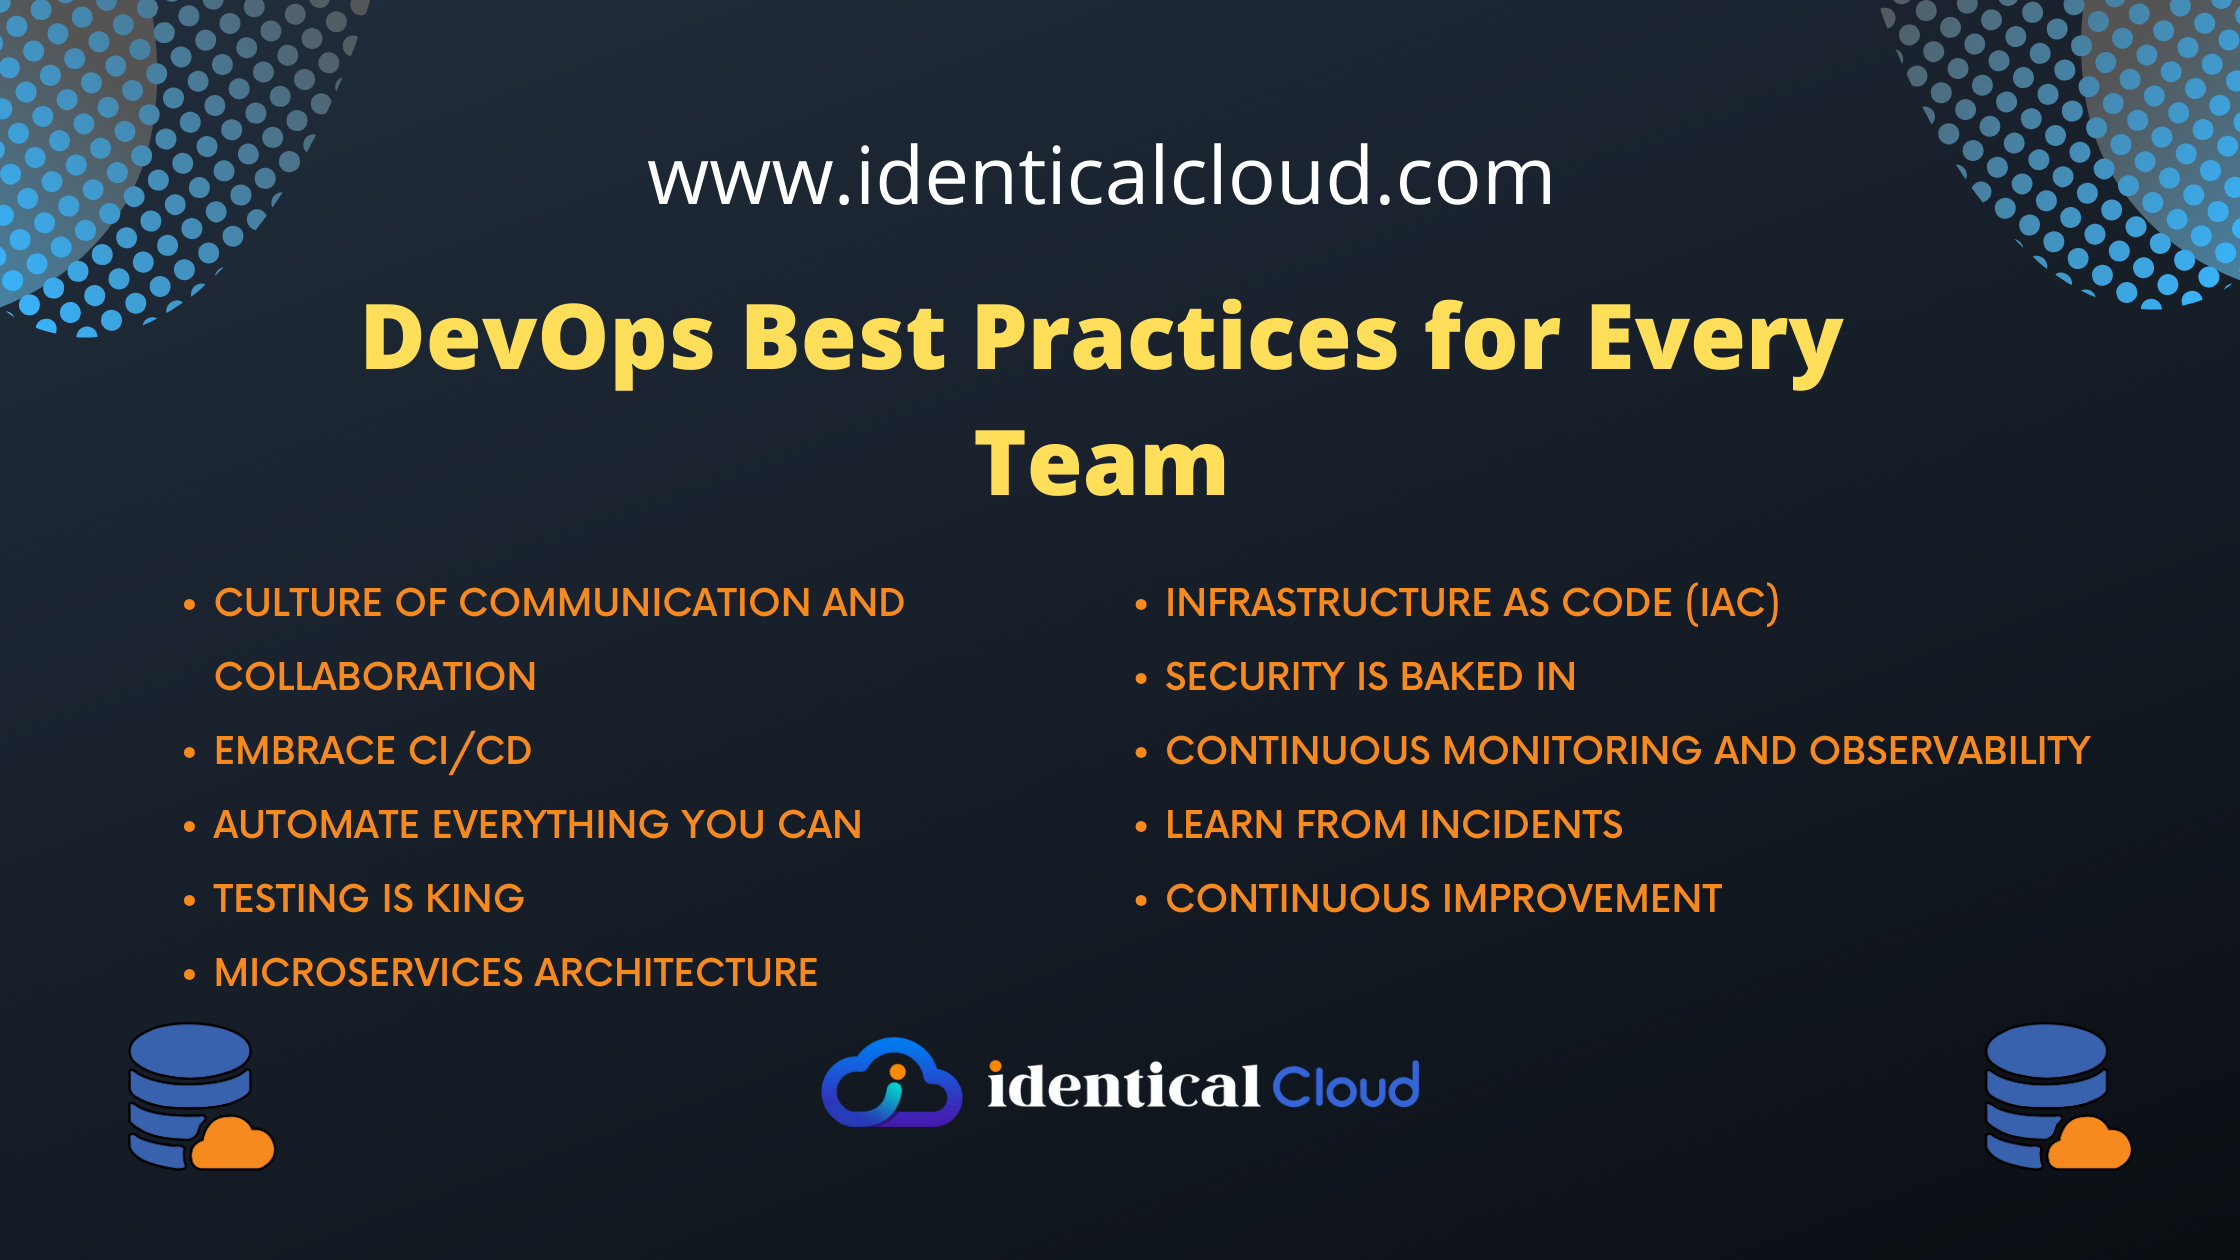 DevOps Best Practices for Every Team - identicalcloud.com